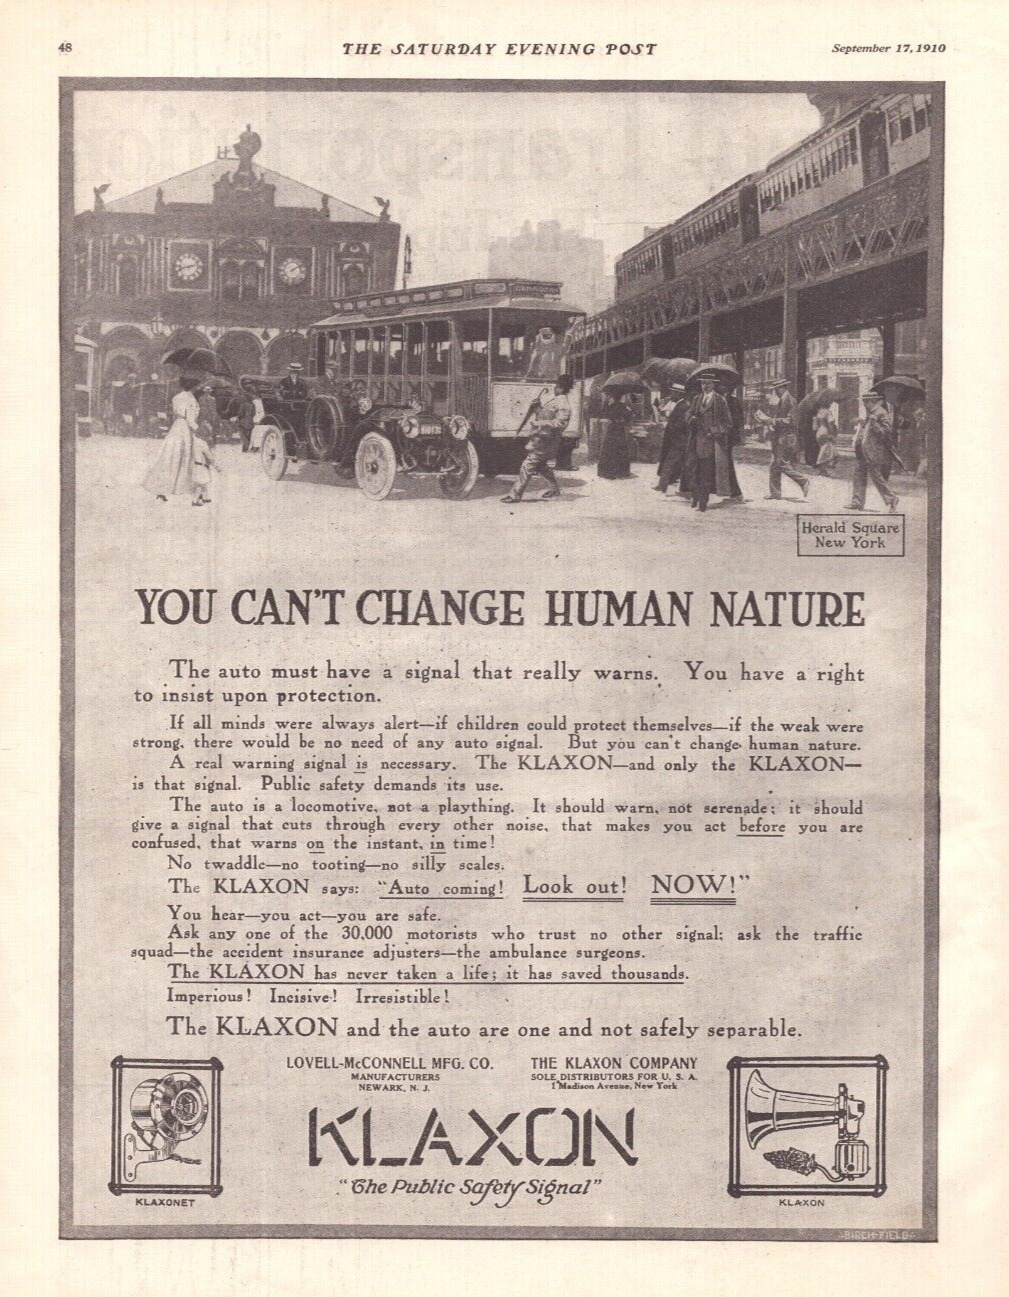 1910 Klaxon Public Safety Signal Car Horn Print Ad Trolly Herald Square New York